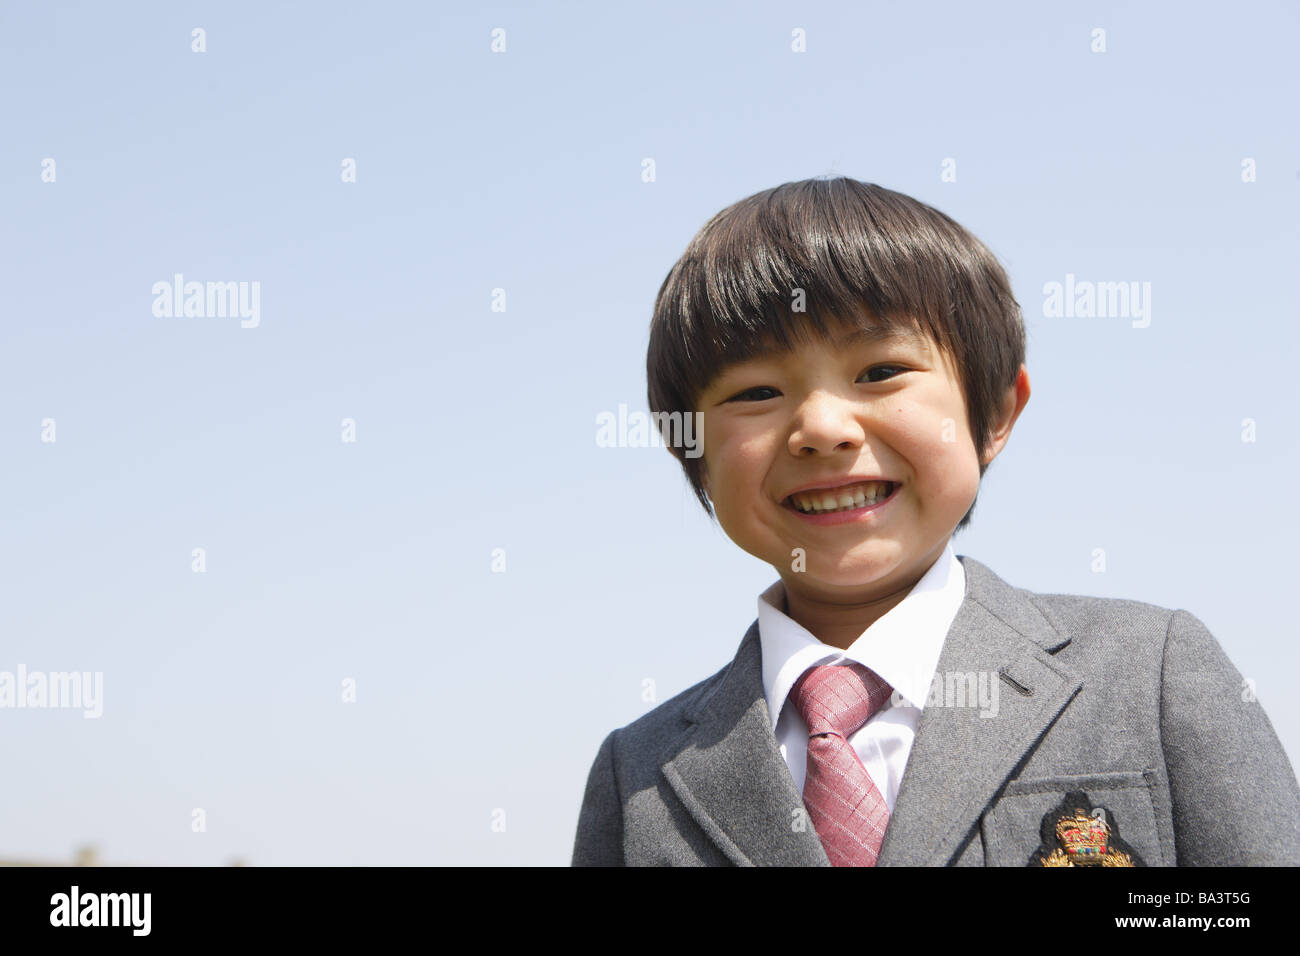 Japanische Schüler gegen klaren Himmel lächelt Stockfoto